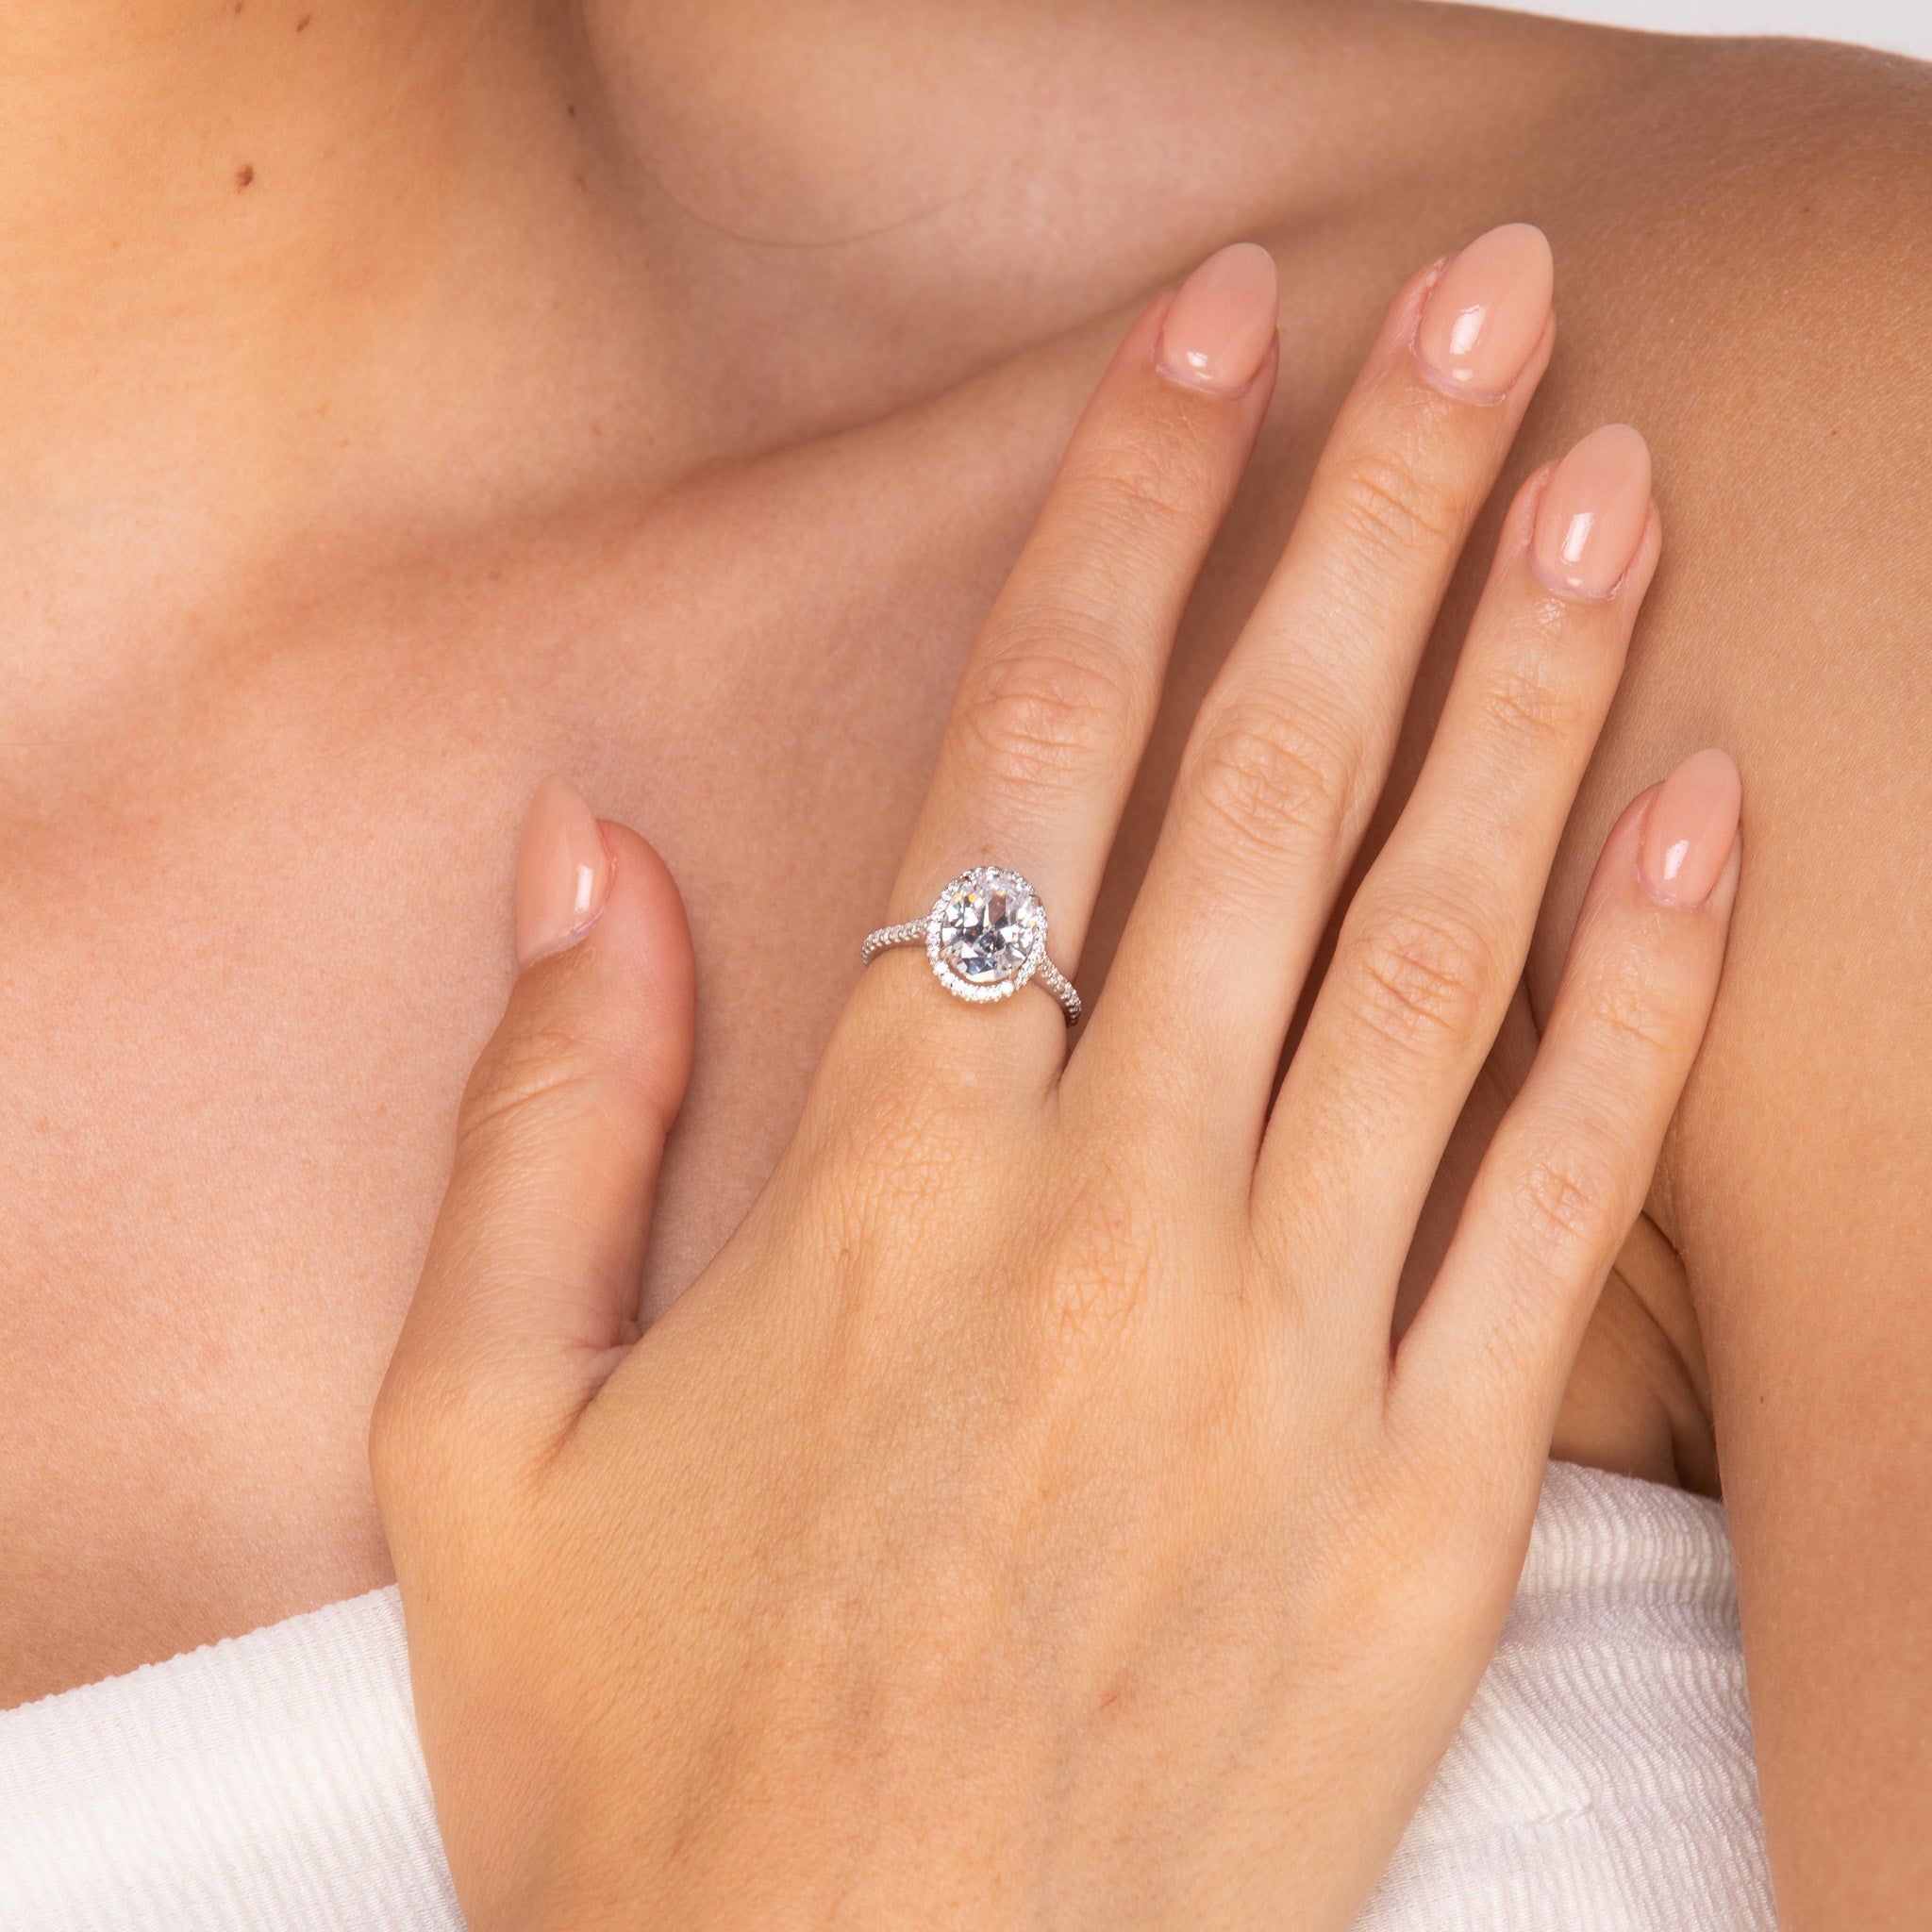 The Natalie Engagement Wedding Ring